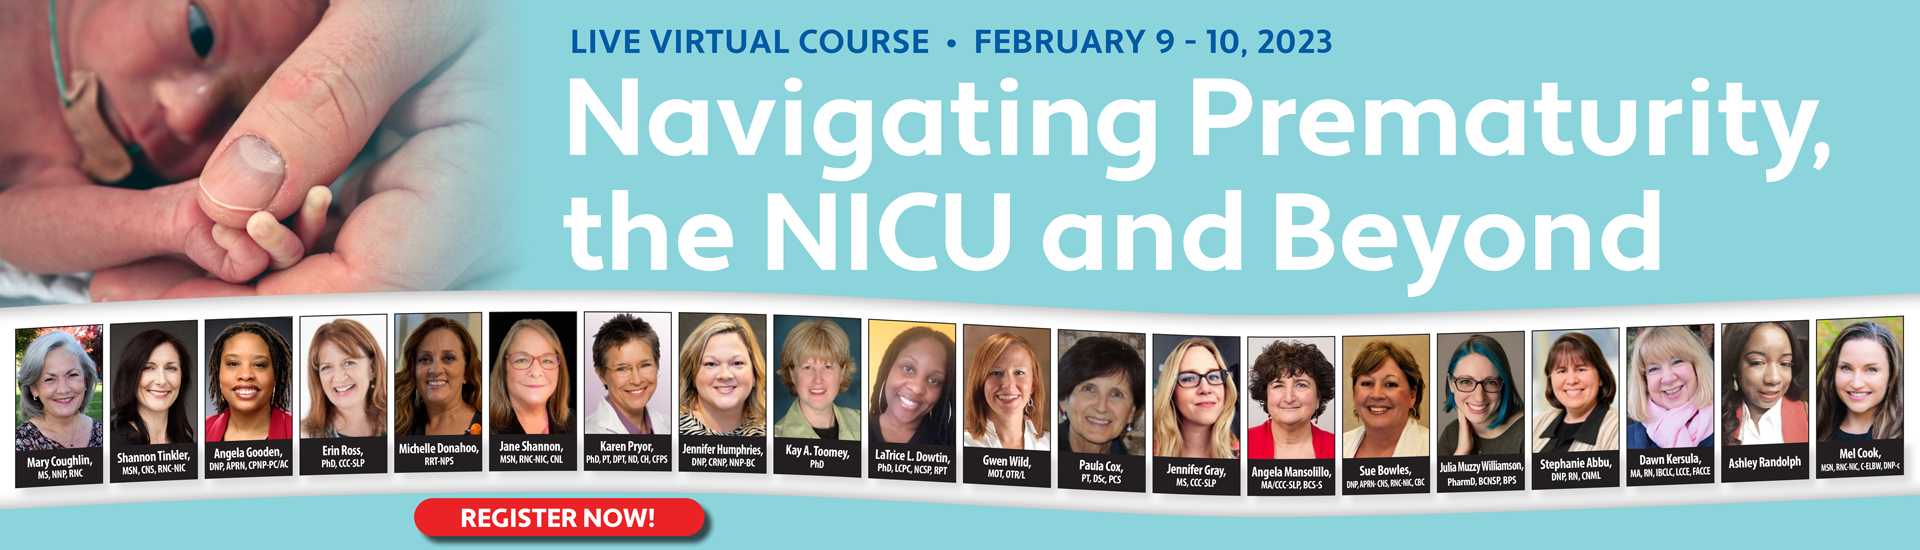 Neonatal Summit: Navigating Prematurity, the NICU and Beyond